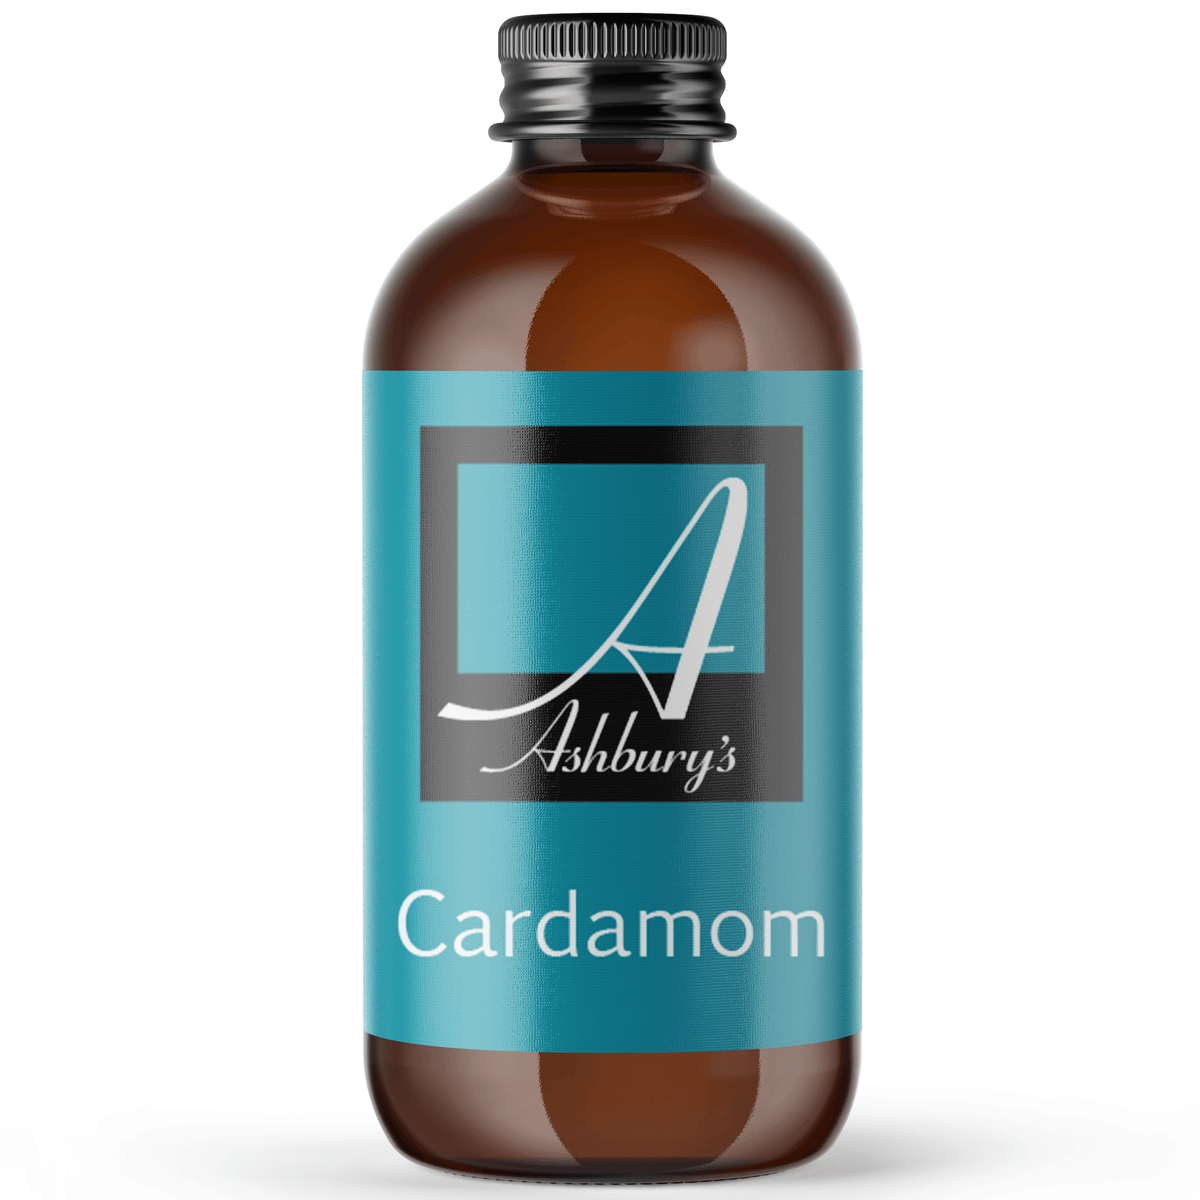 Cardamom (Elettaria cardamomum)